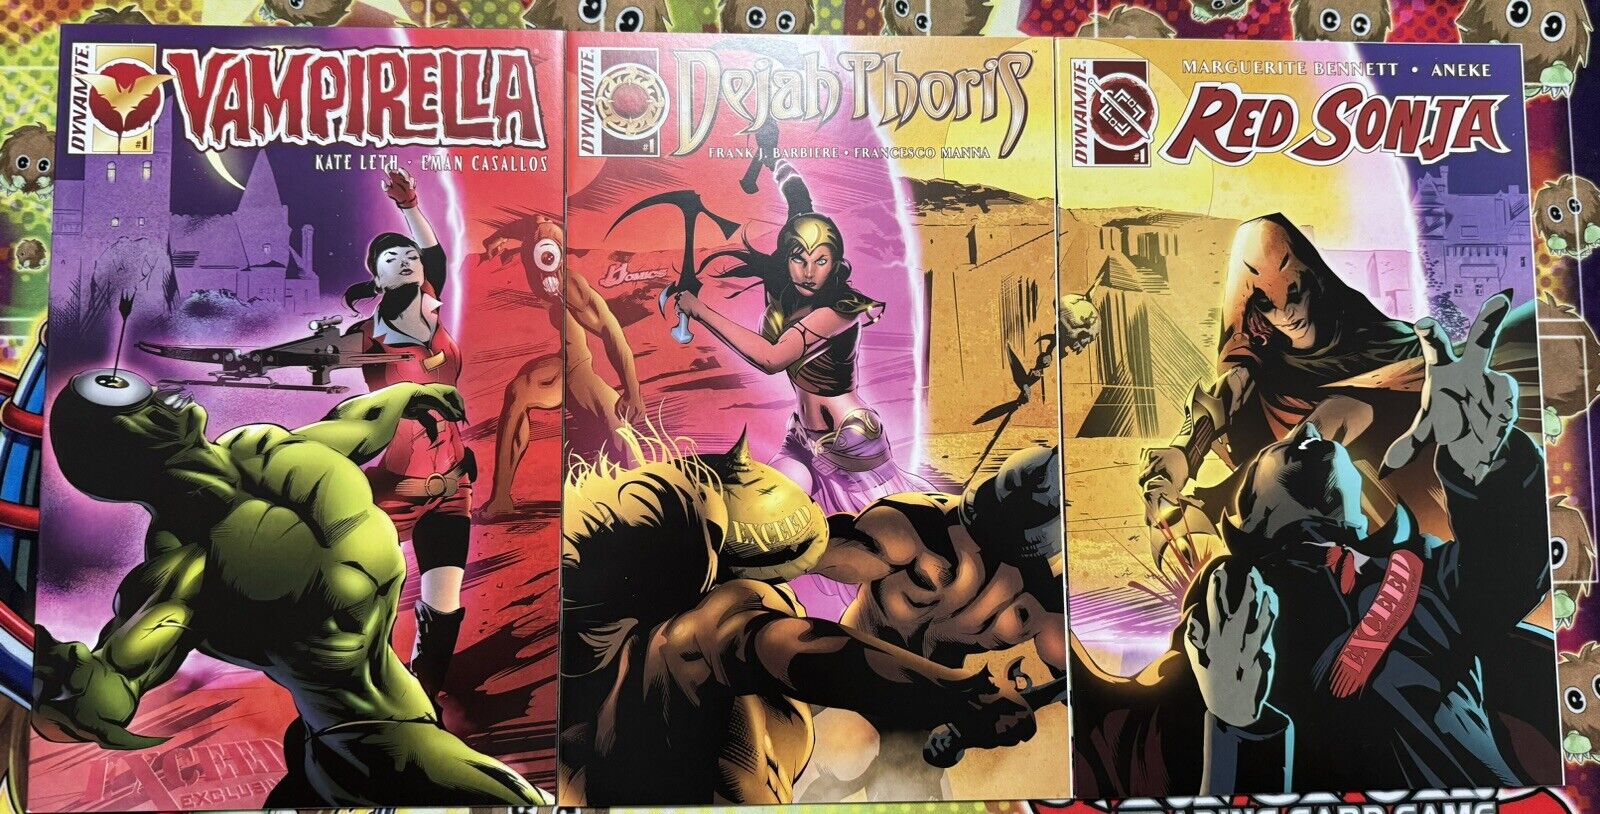 Deja Thoris Red Sonja Vampirella #1s Exclusive Connecting Covers Dynamite (2016)